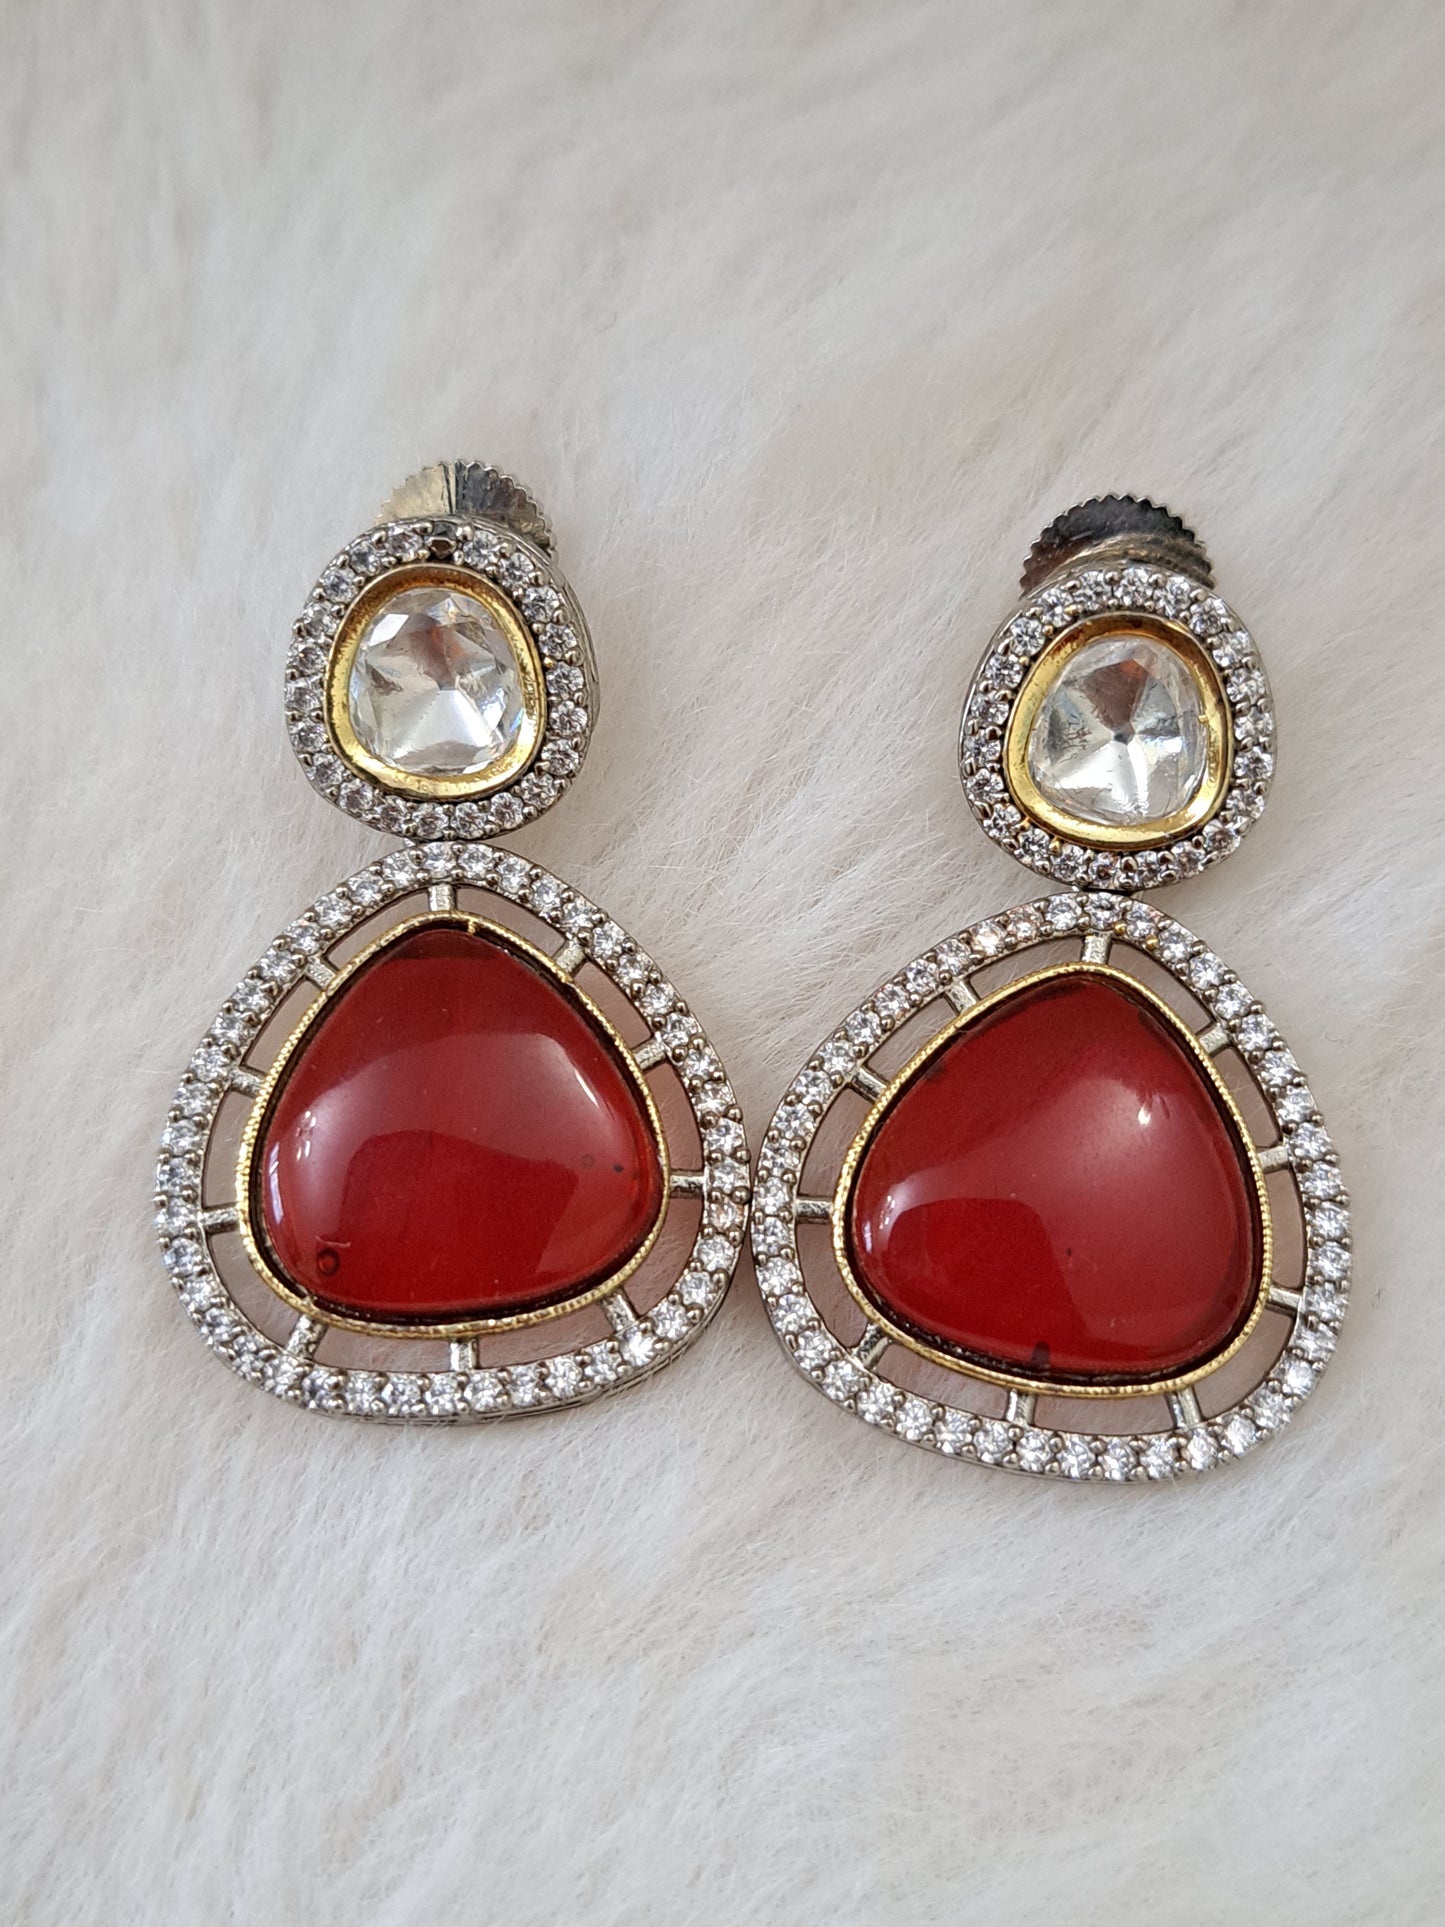 Kundan earrings with red duplet stone.